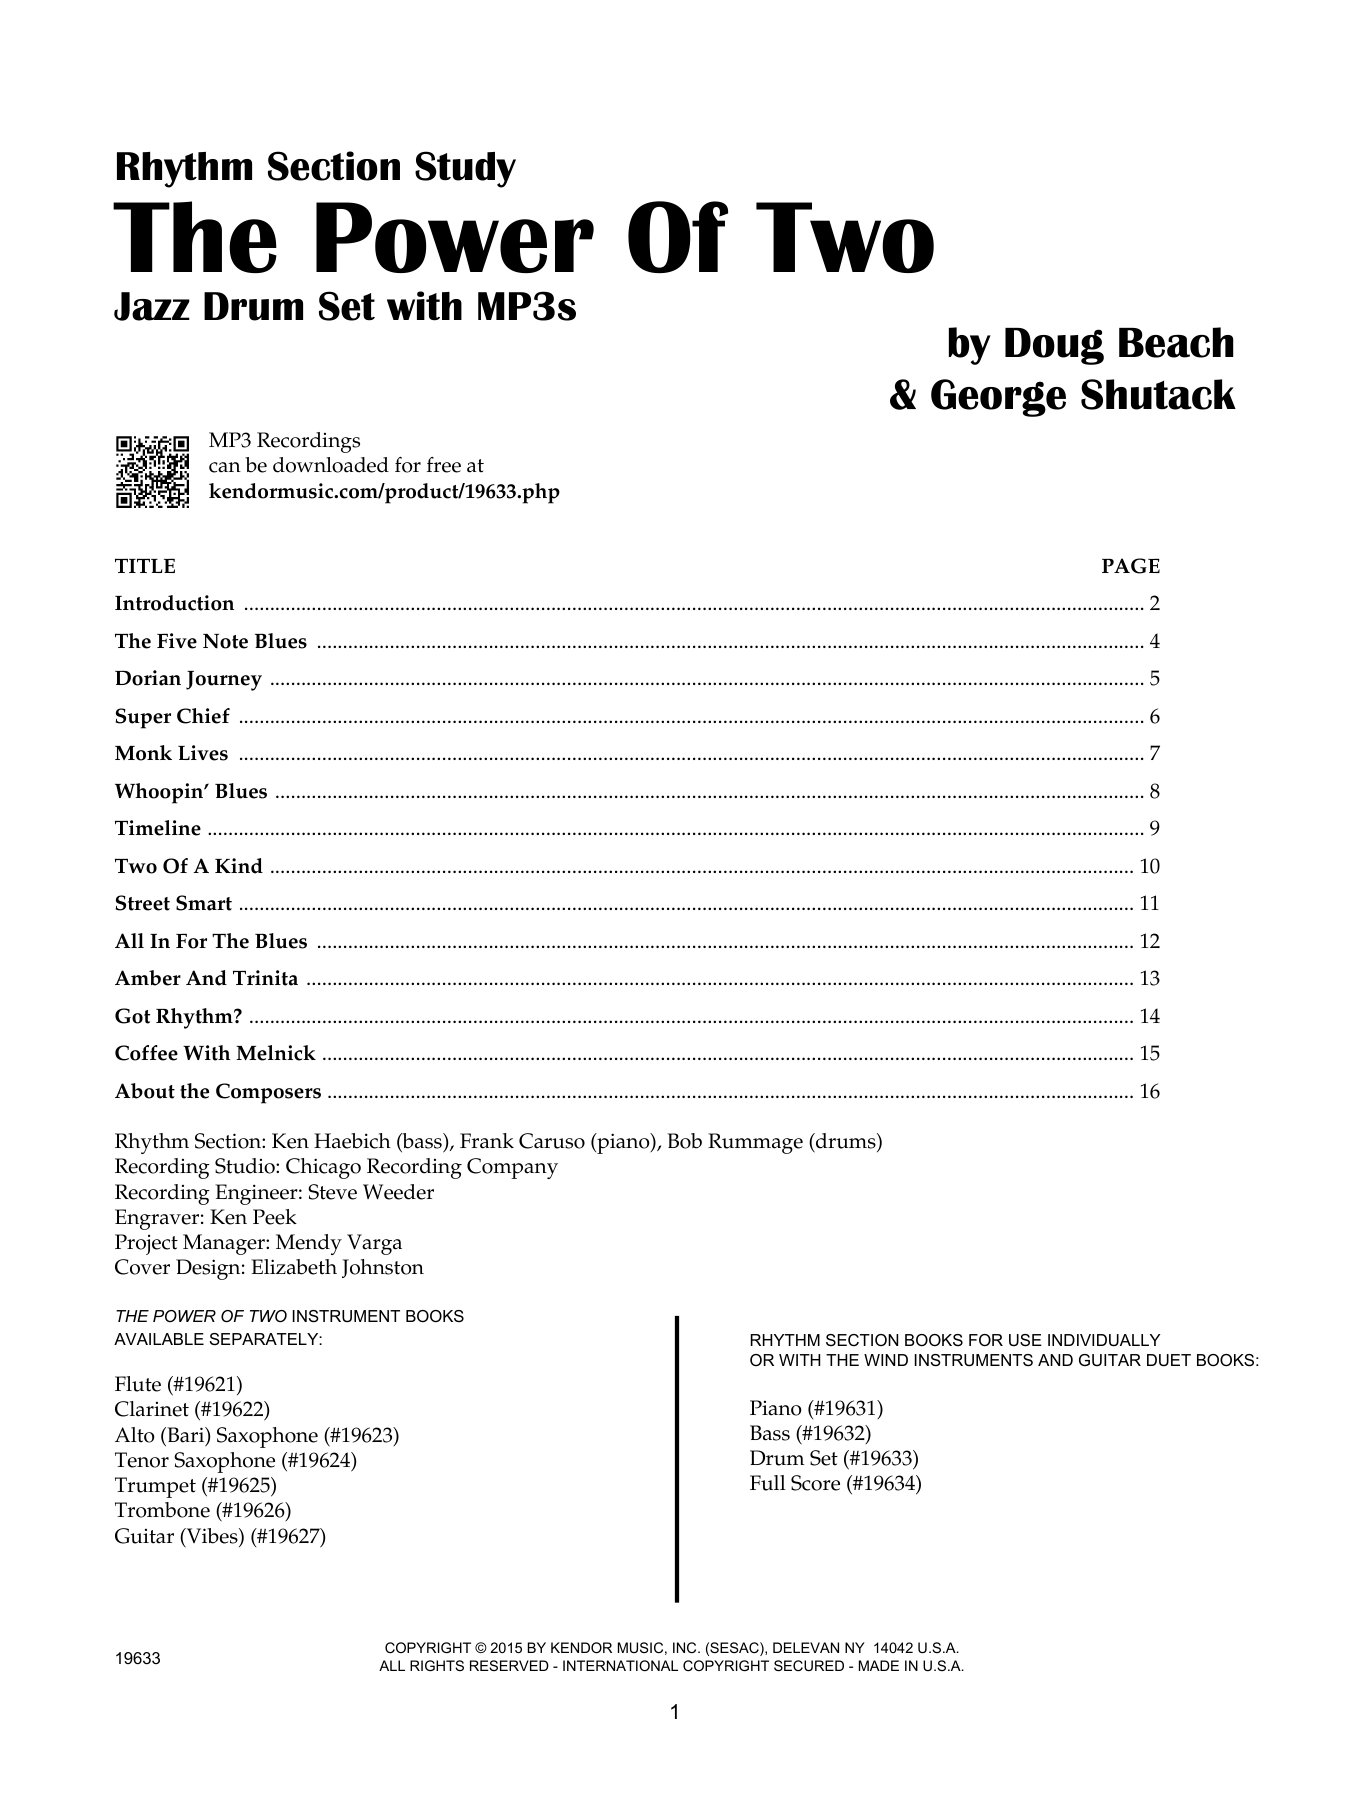 Download Doug Beach & George Shutack The Power Of Two - Drum Set - Drum Set Sheet Music